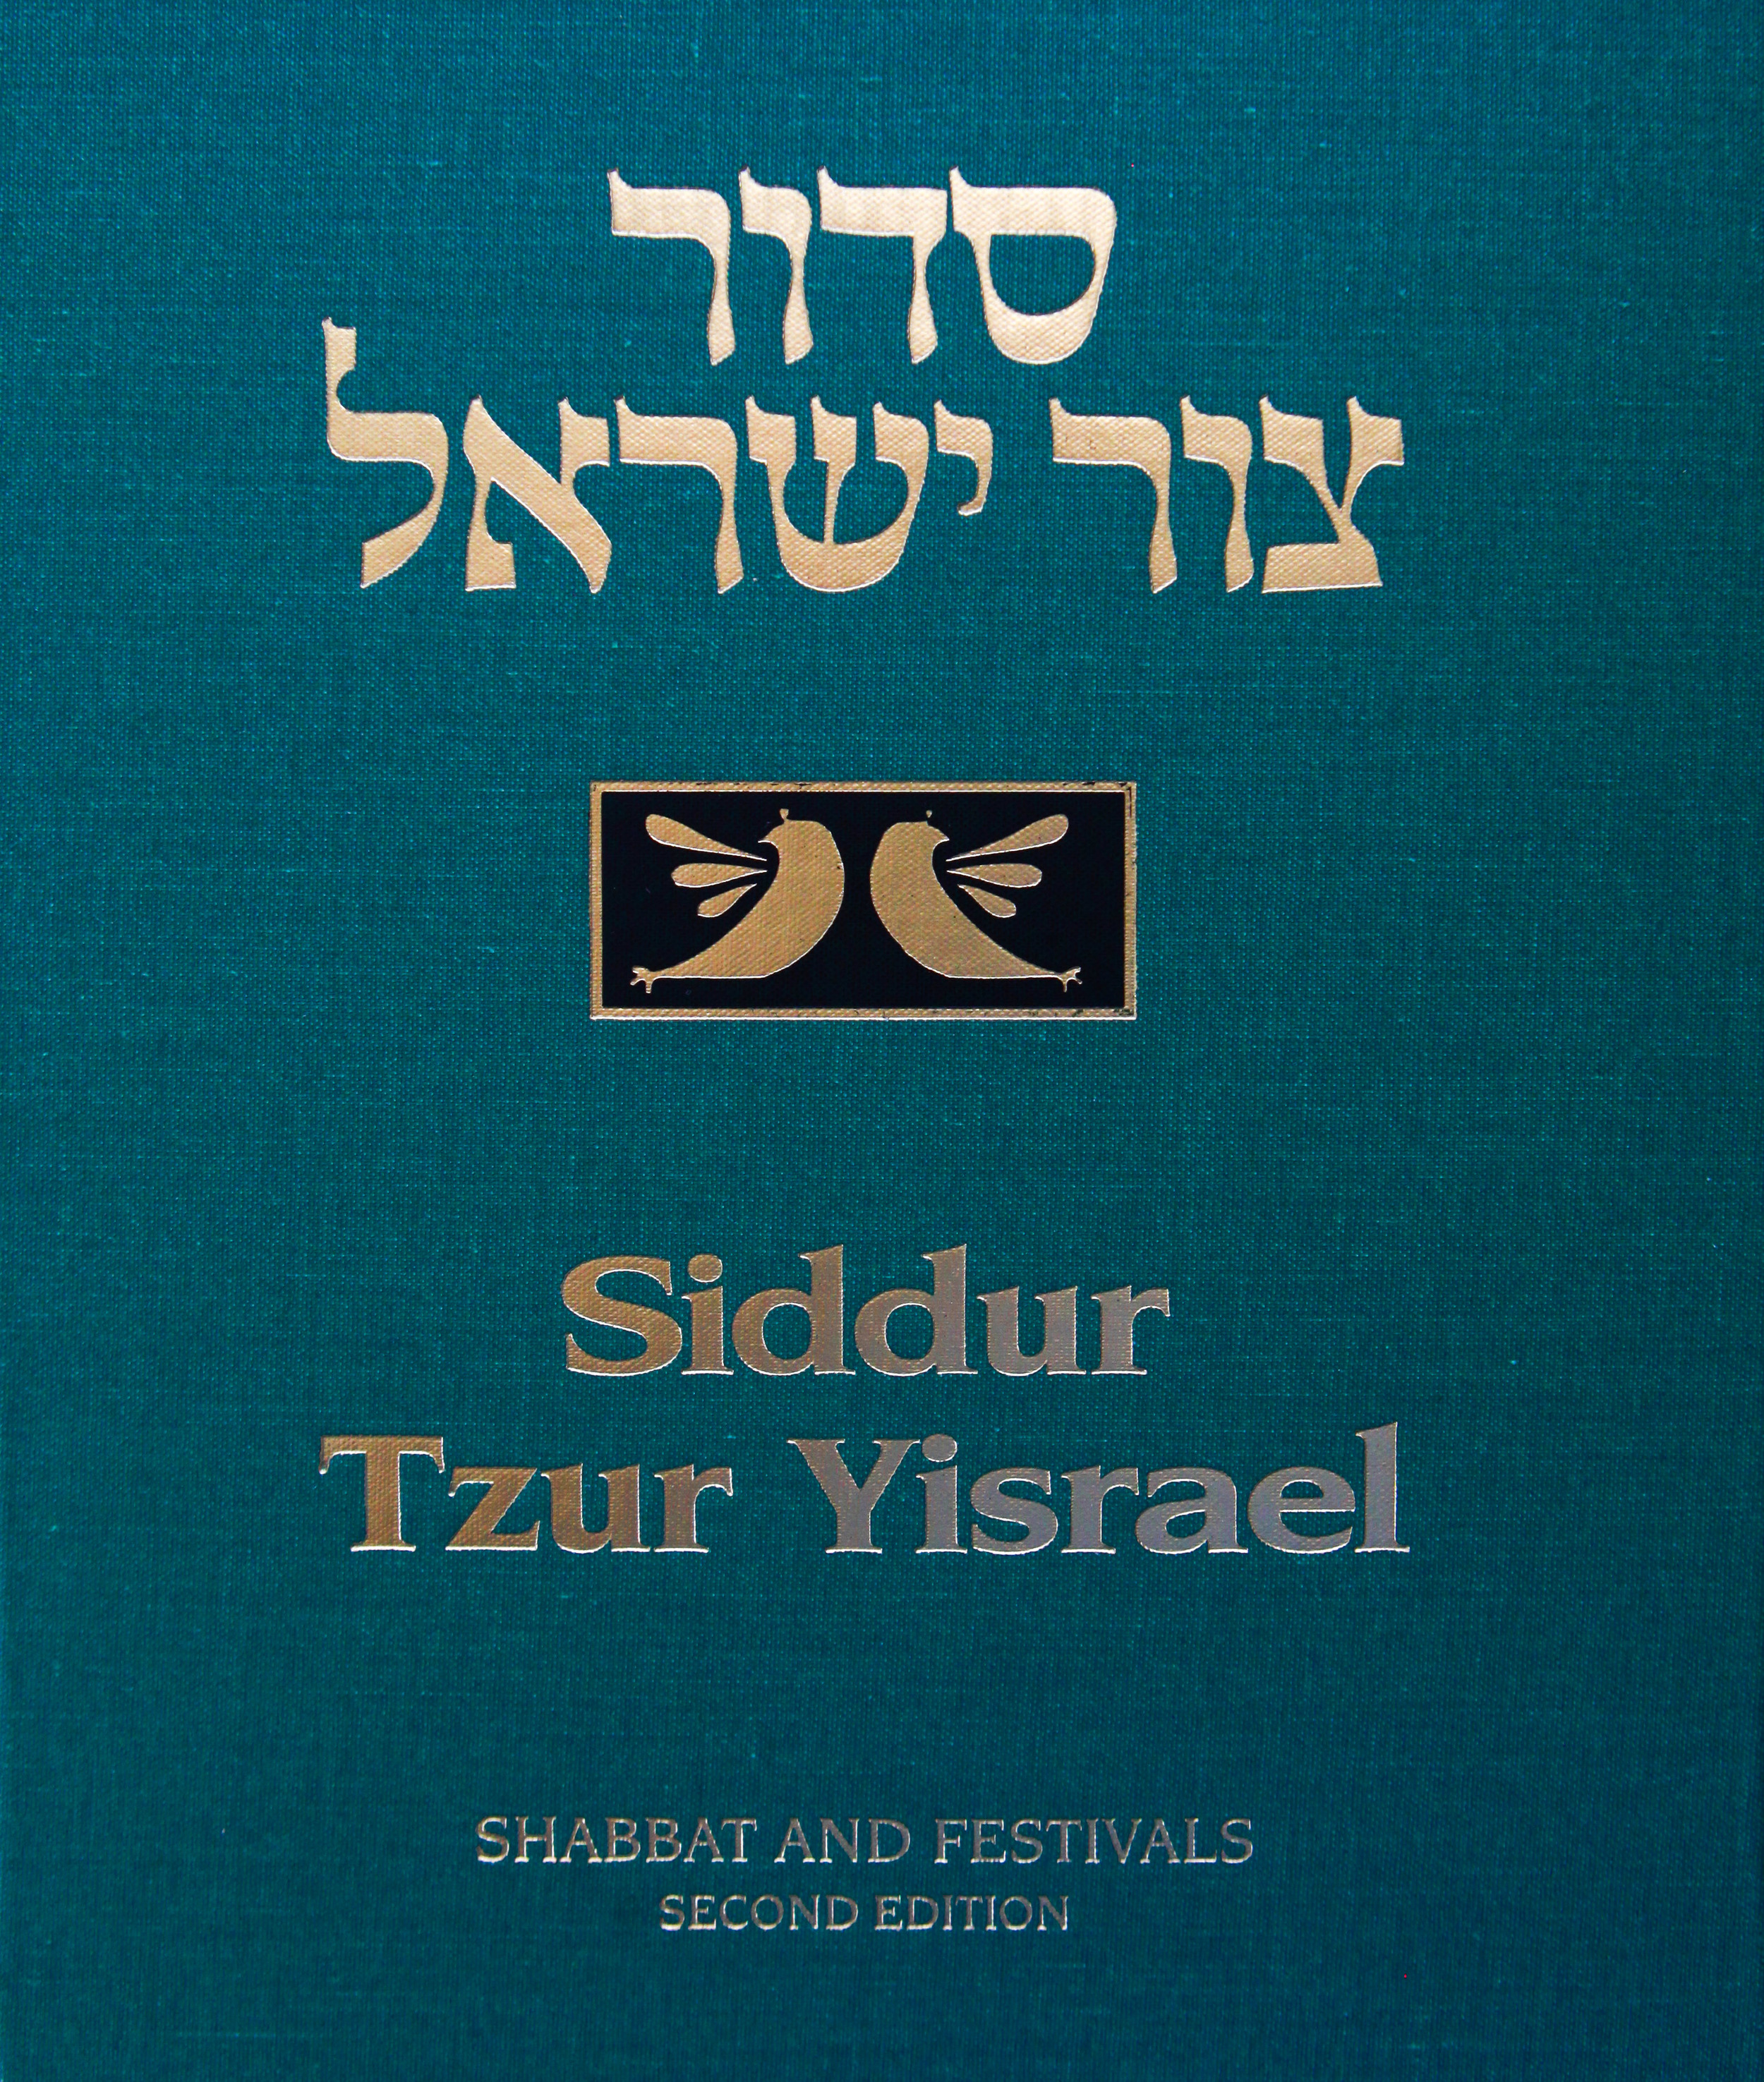 Tzur Yisrael - Shabbat and Festivals Cover.JPG